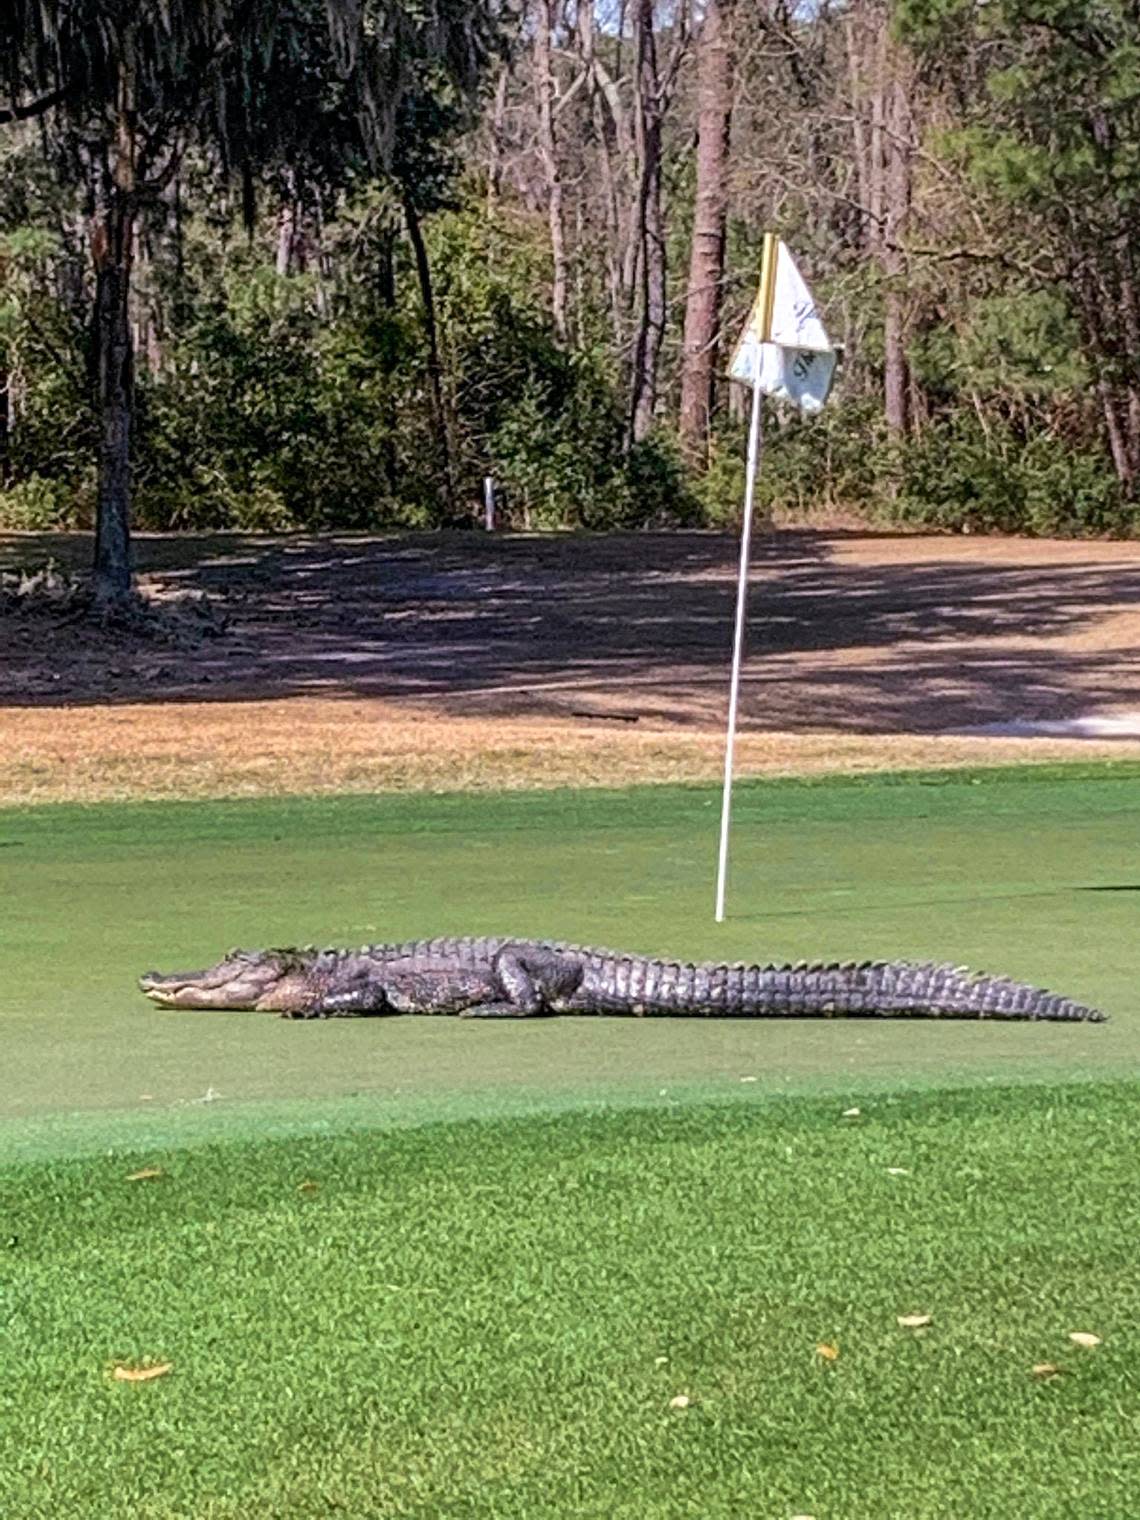 An alligator stops for a rest on Feb. 28, 2021 on a golf course green in Indigo Run on Hilton Head Island.